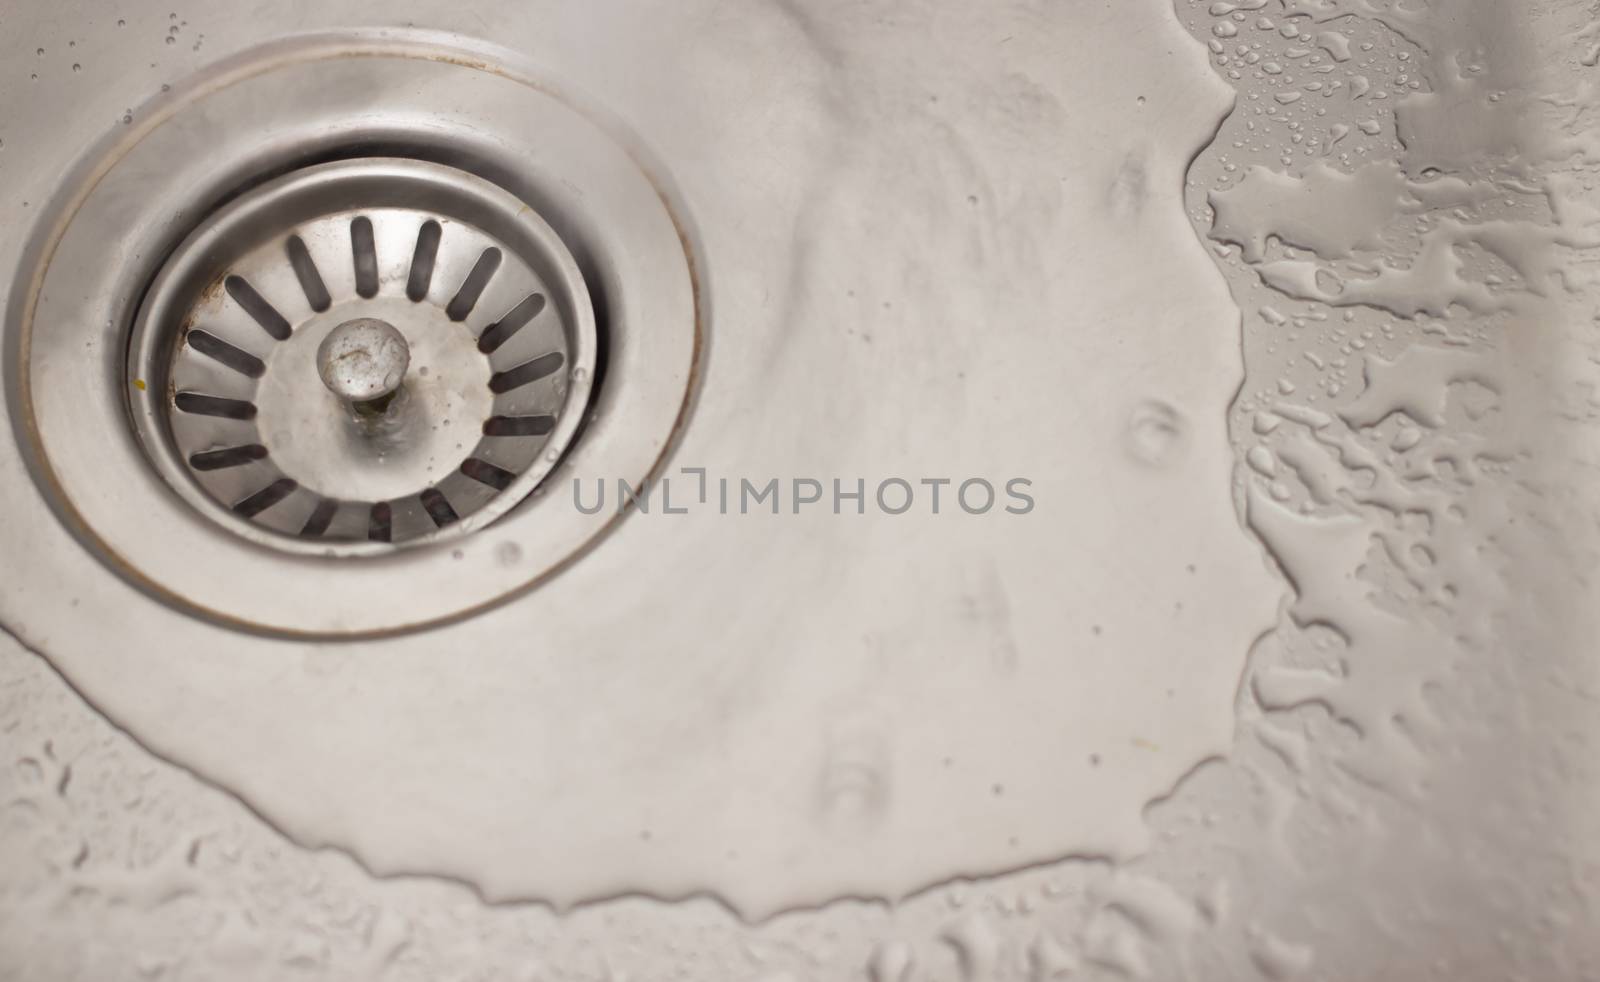 Dirty Sink Dishwasher Drain by ttt1341